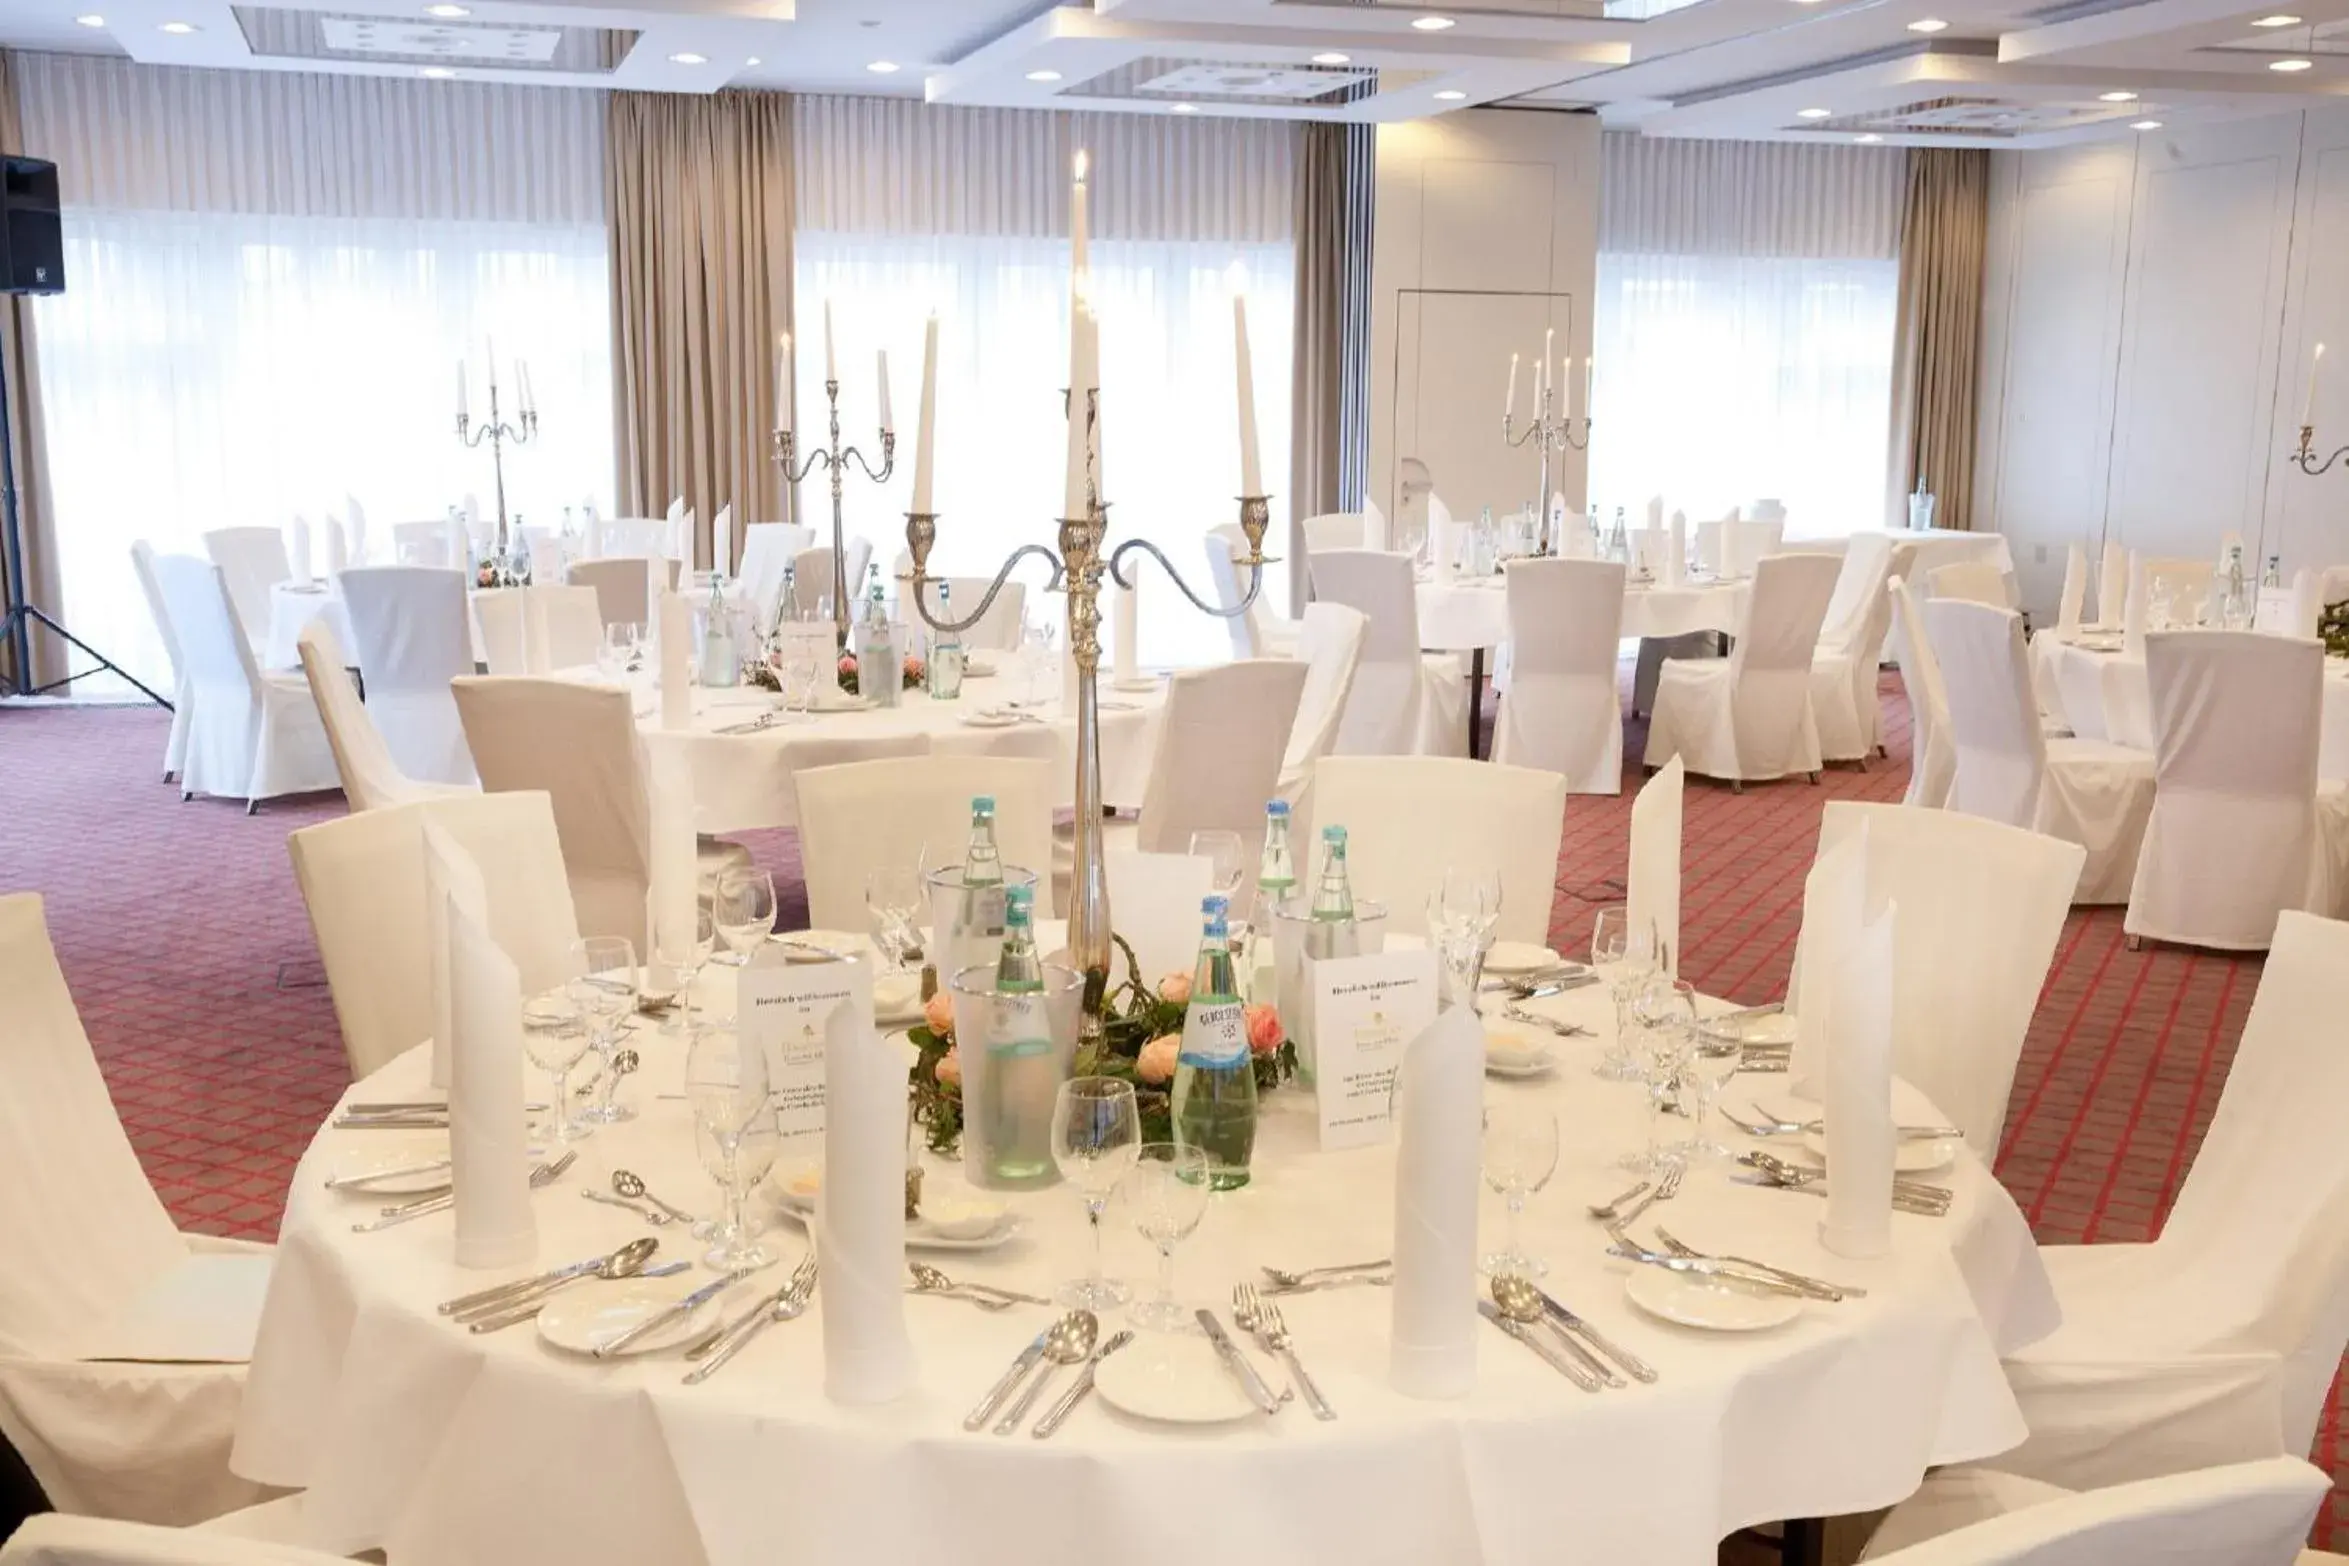 Banquet/Function facilities, Banquet Facilities in Haus am Meer Hotel